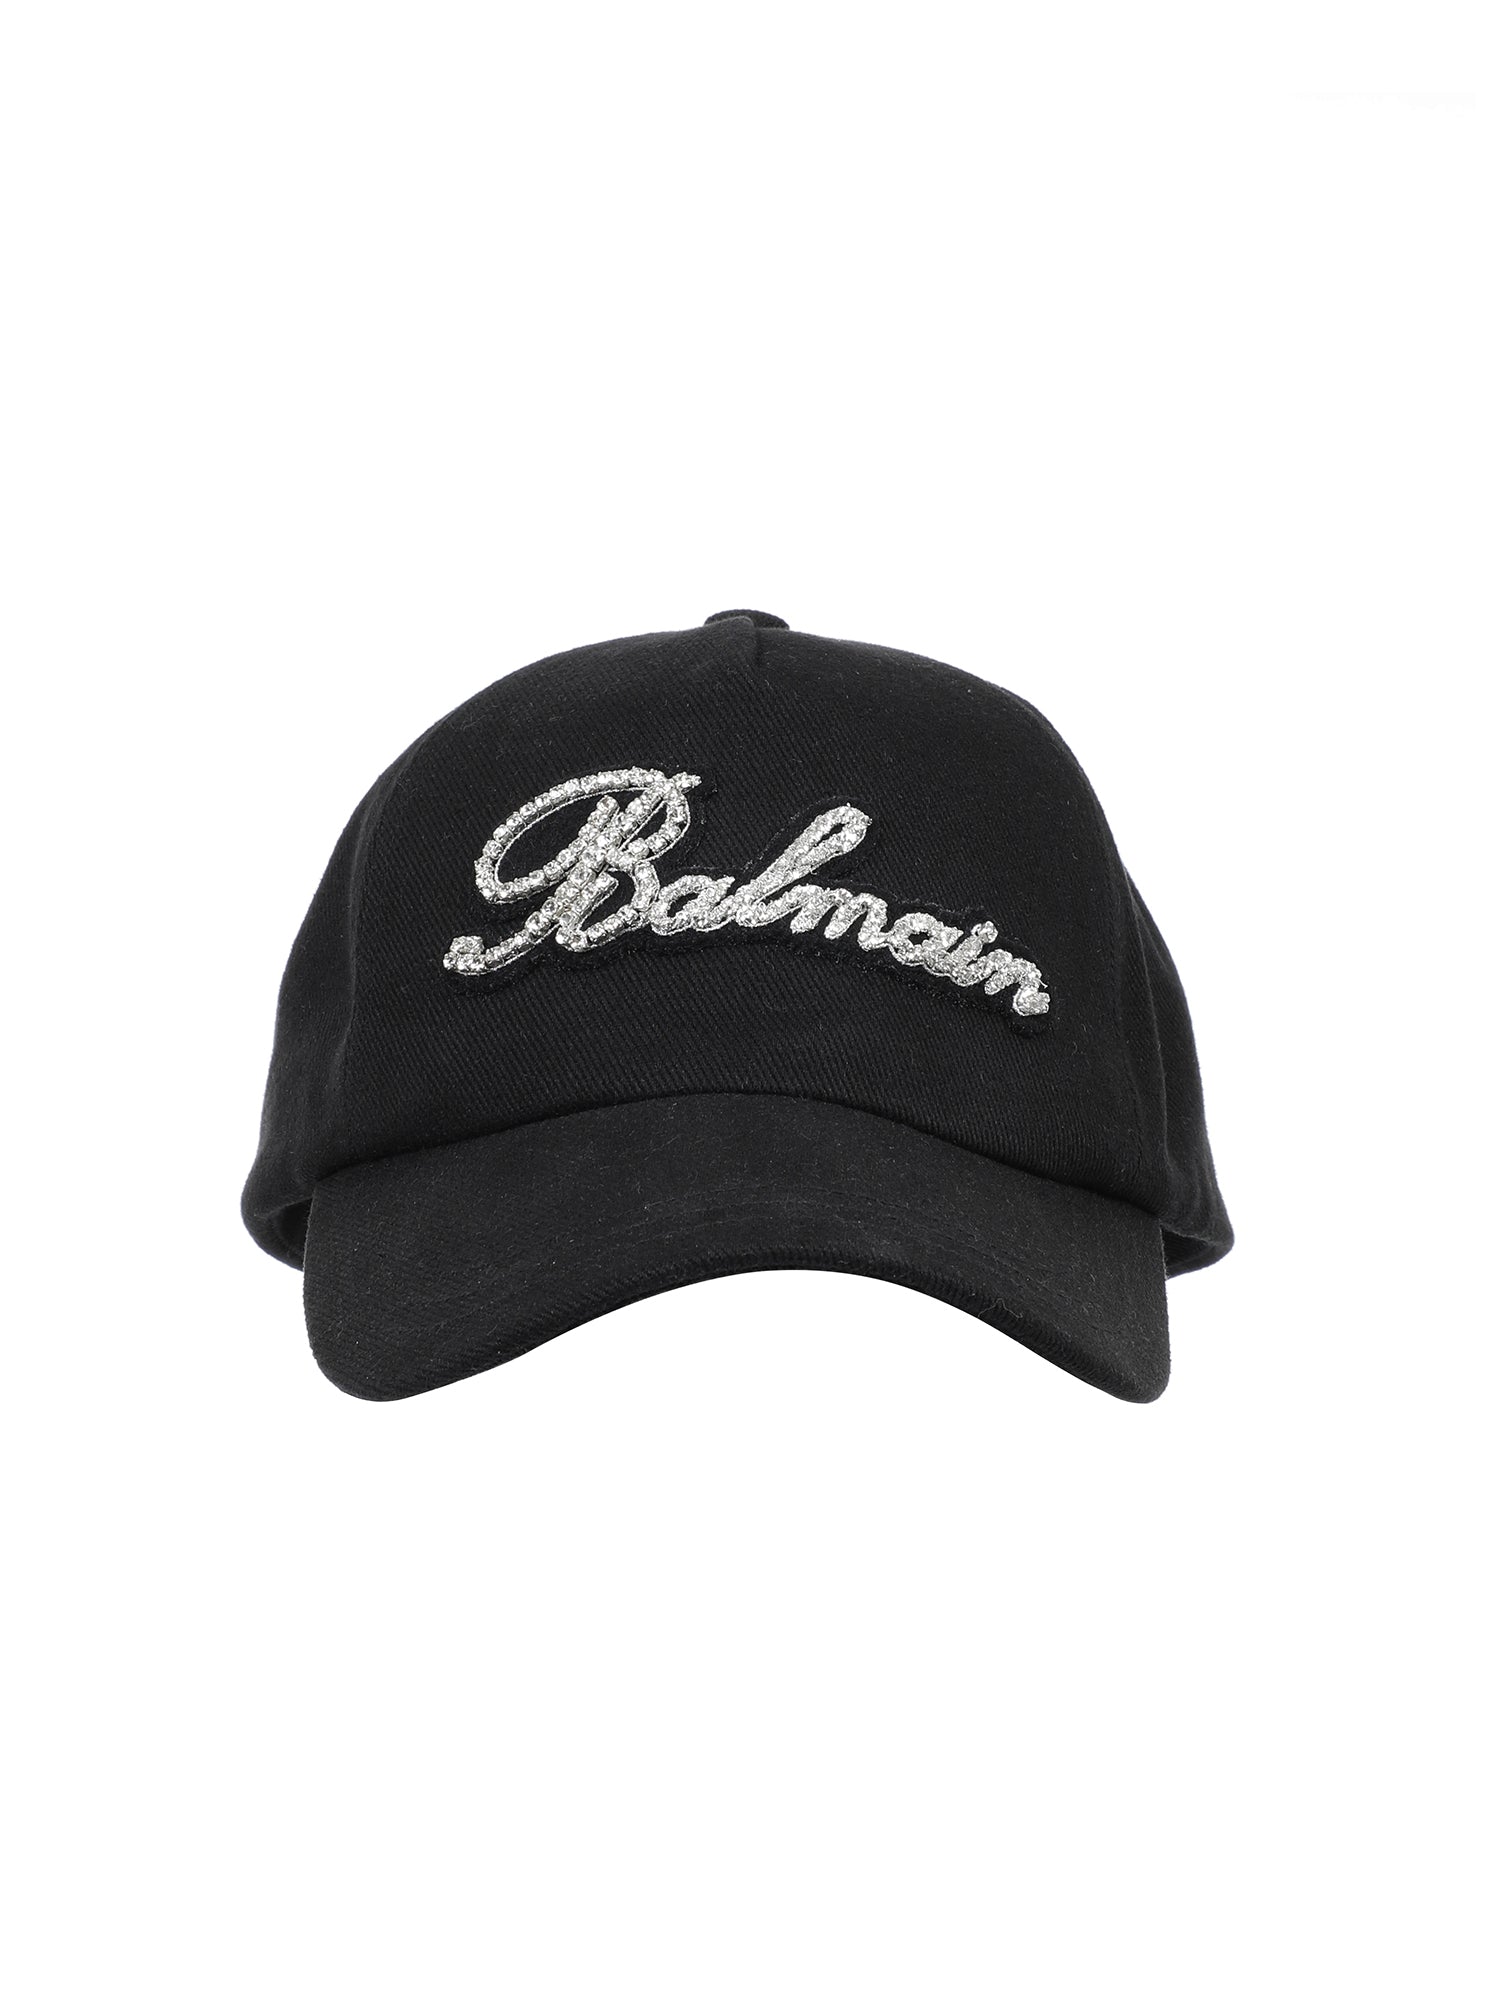 BALMAIN SIGNATURE EMBROIDERY COTTON CAP - BLACK